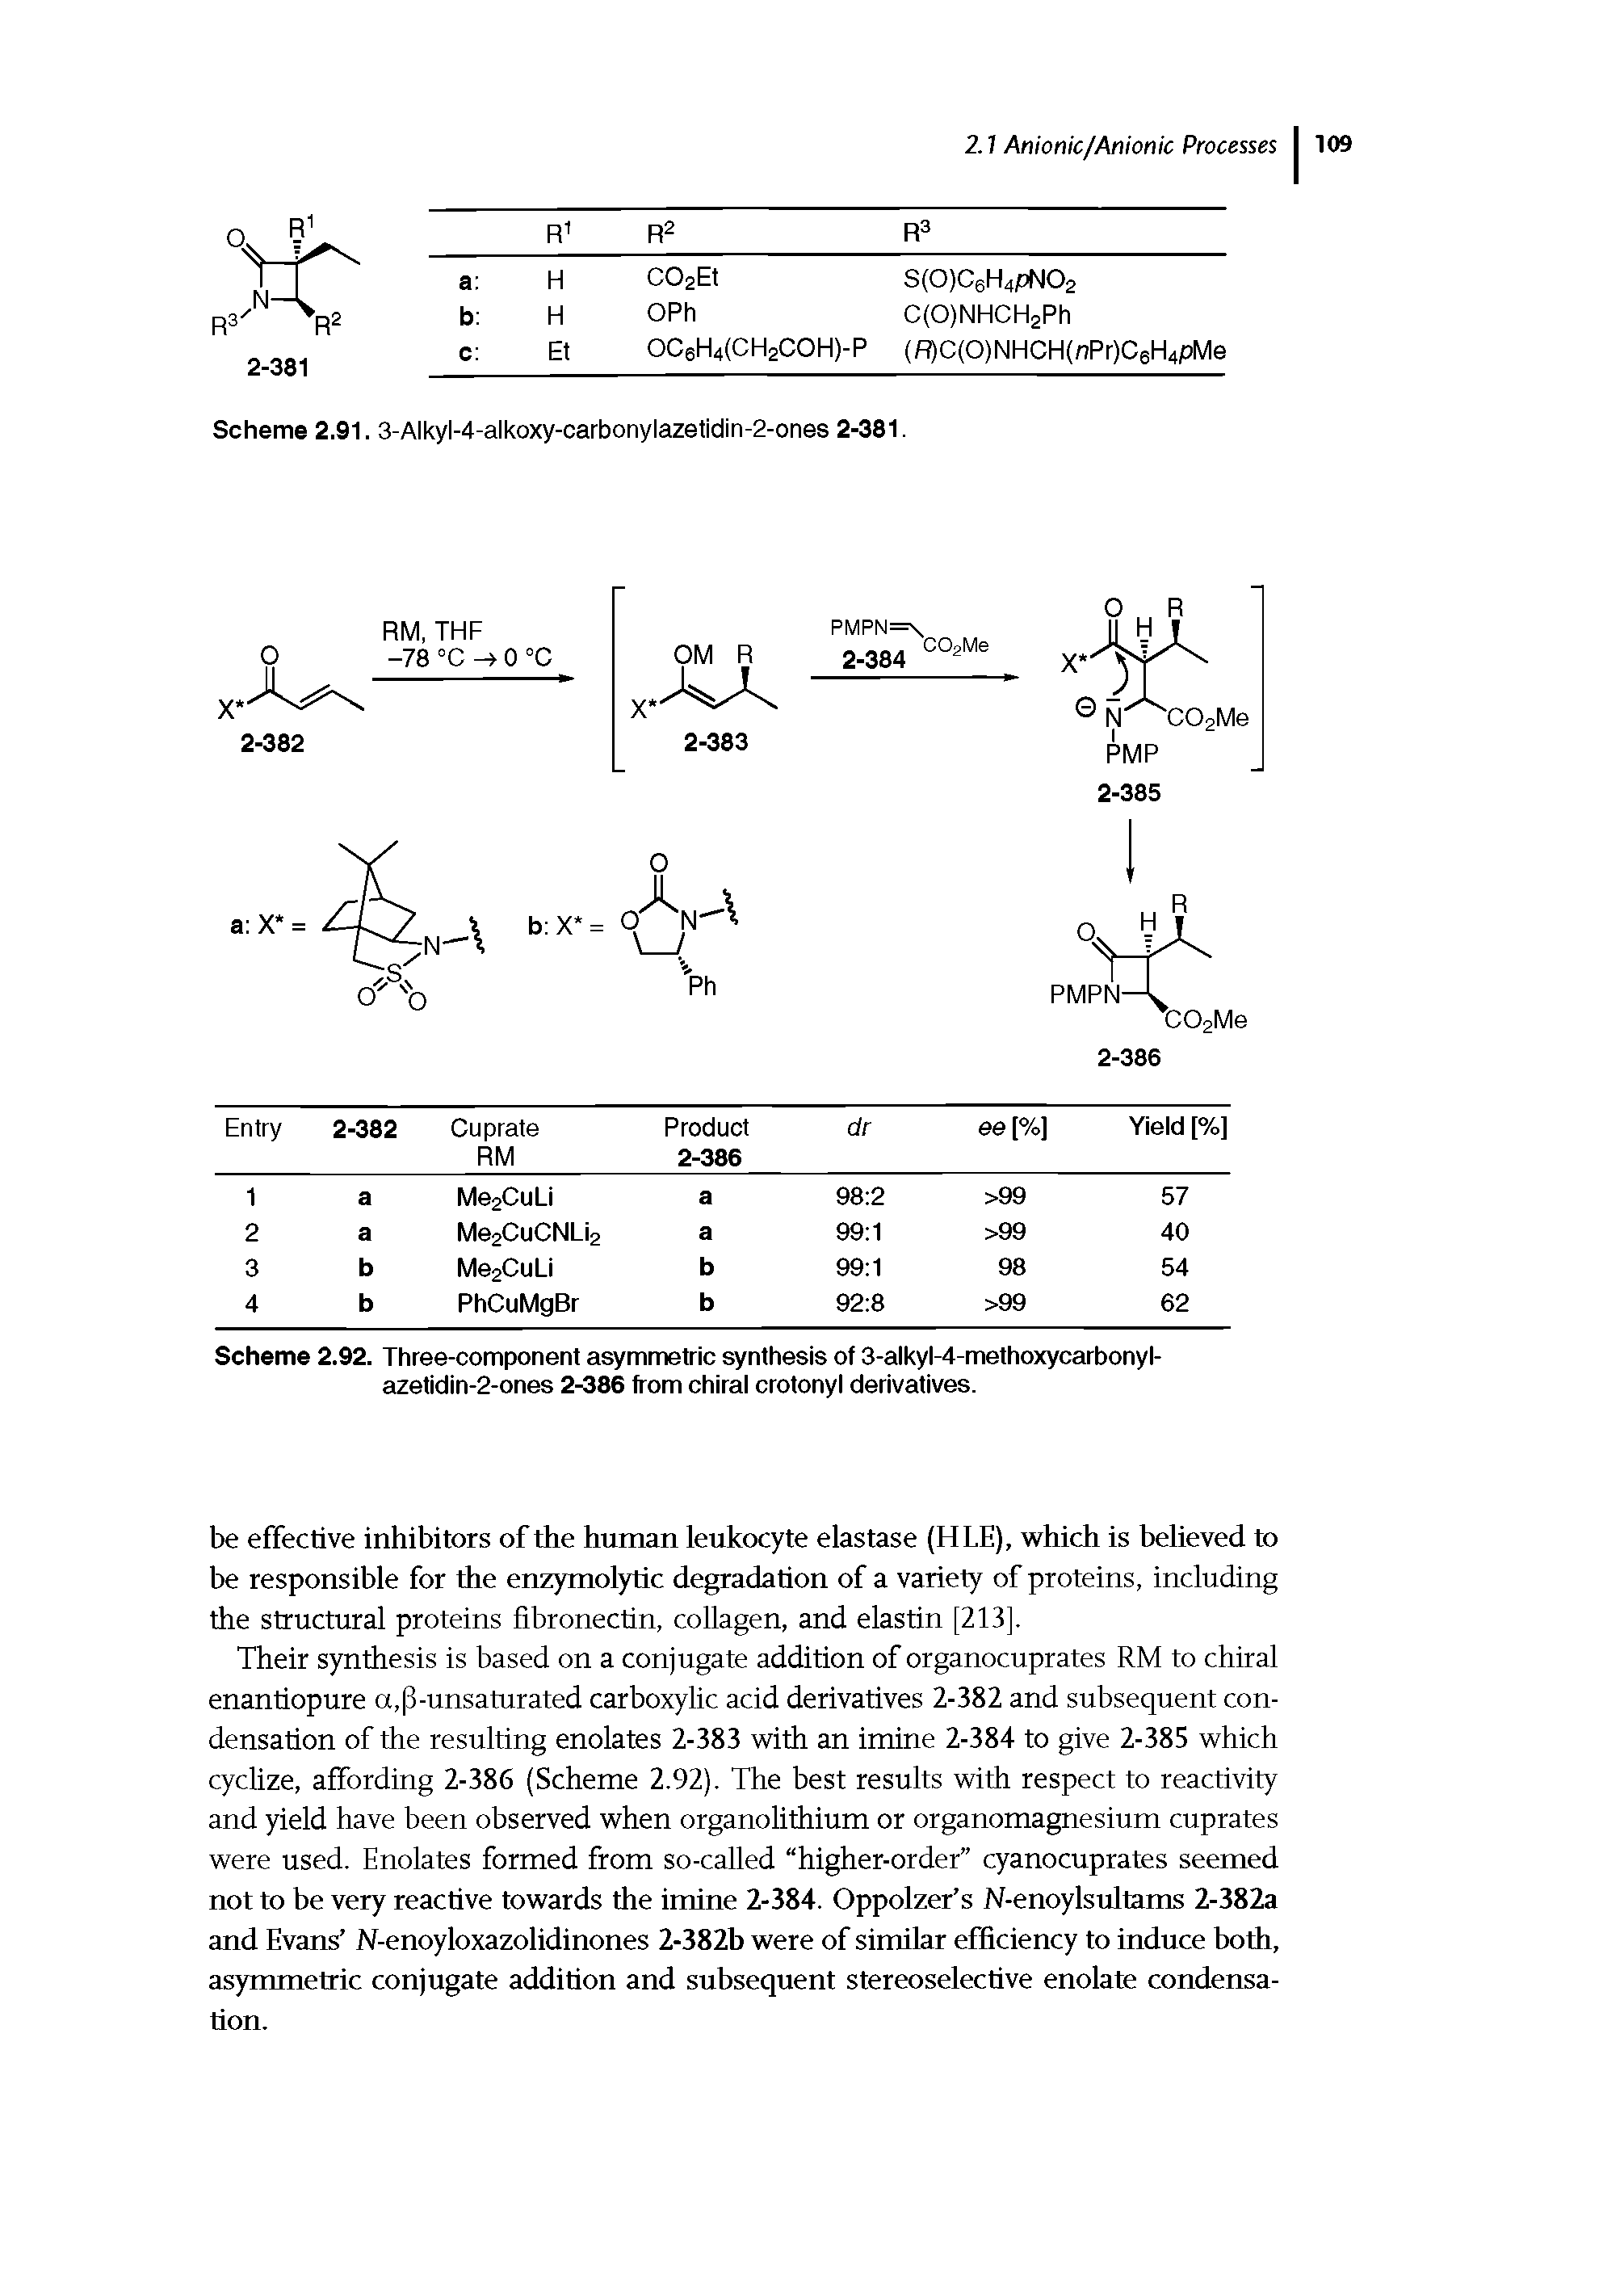 Scheme 2.92. Three-component asymmetric synthesis of 3-alkyl-4-methoxycarbonyl-azetidin-2-ones 2-386 from chiral crotonyl derivatives.